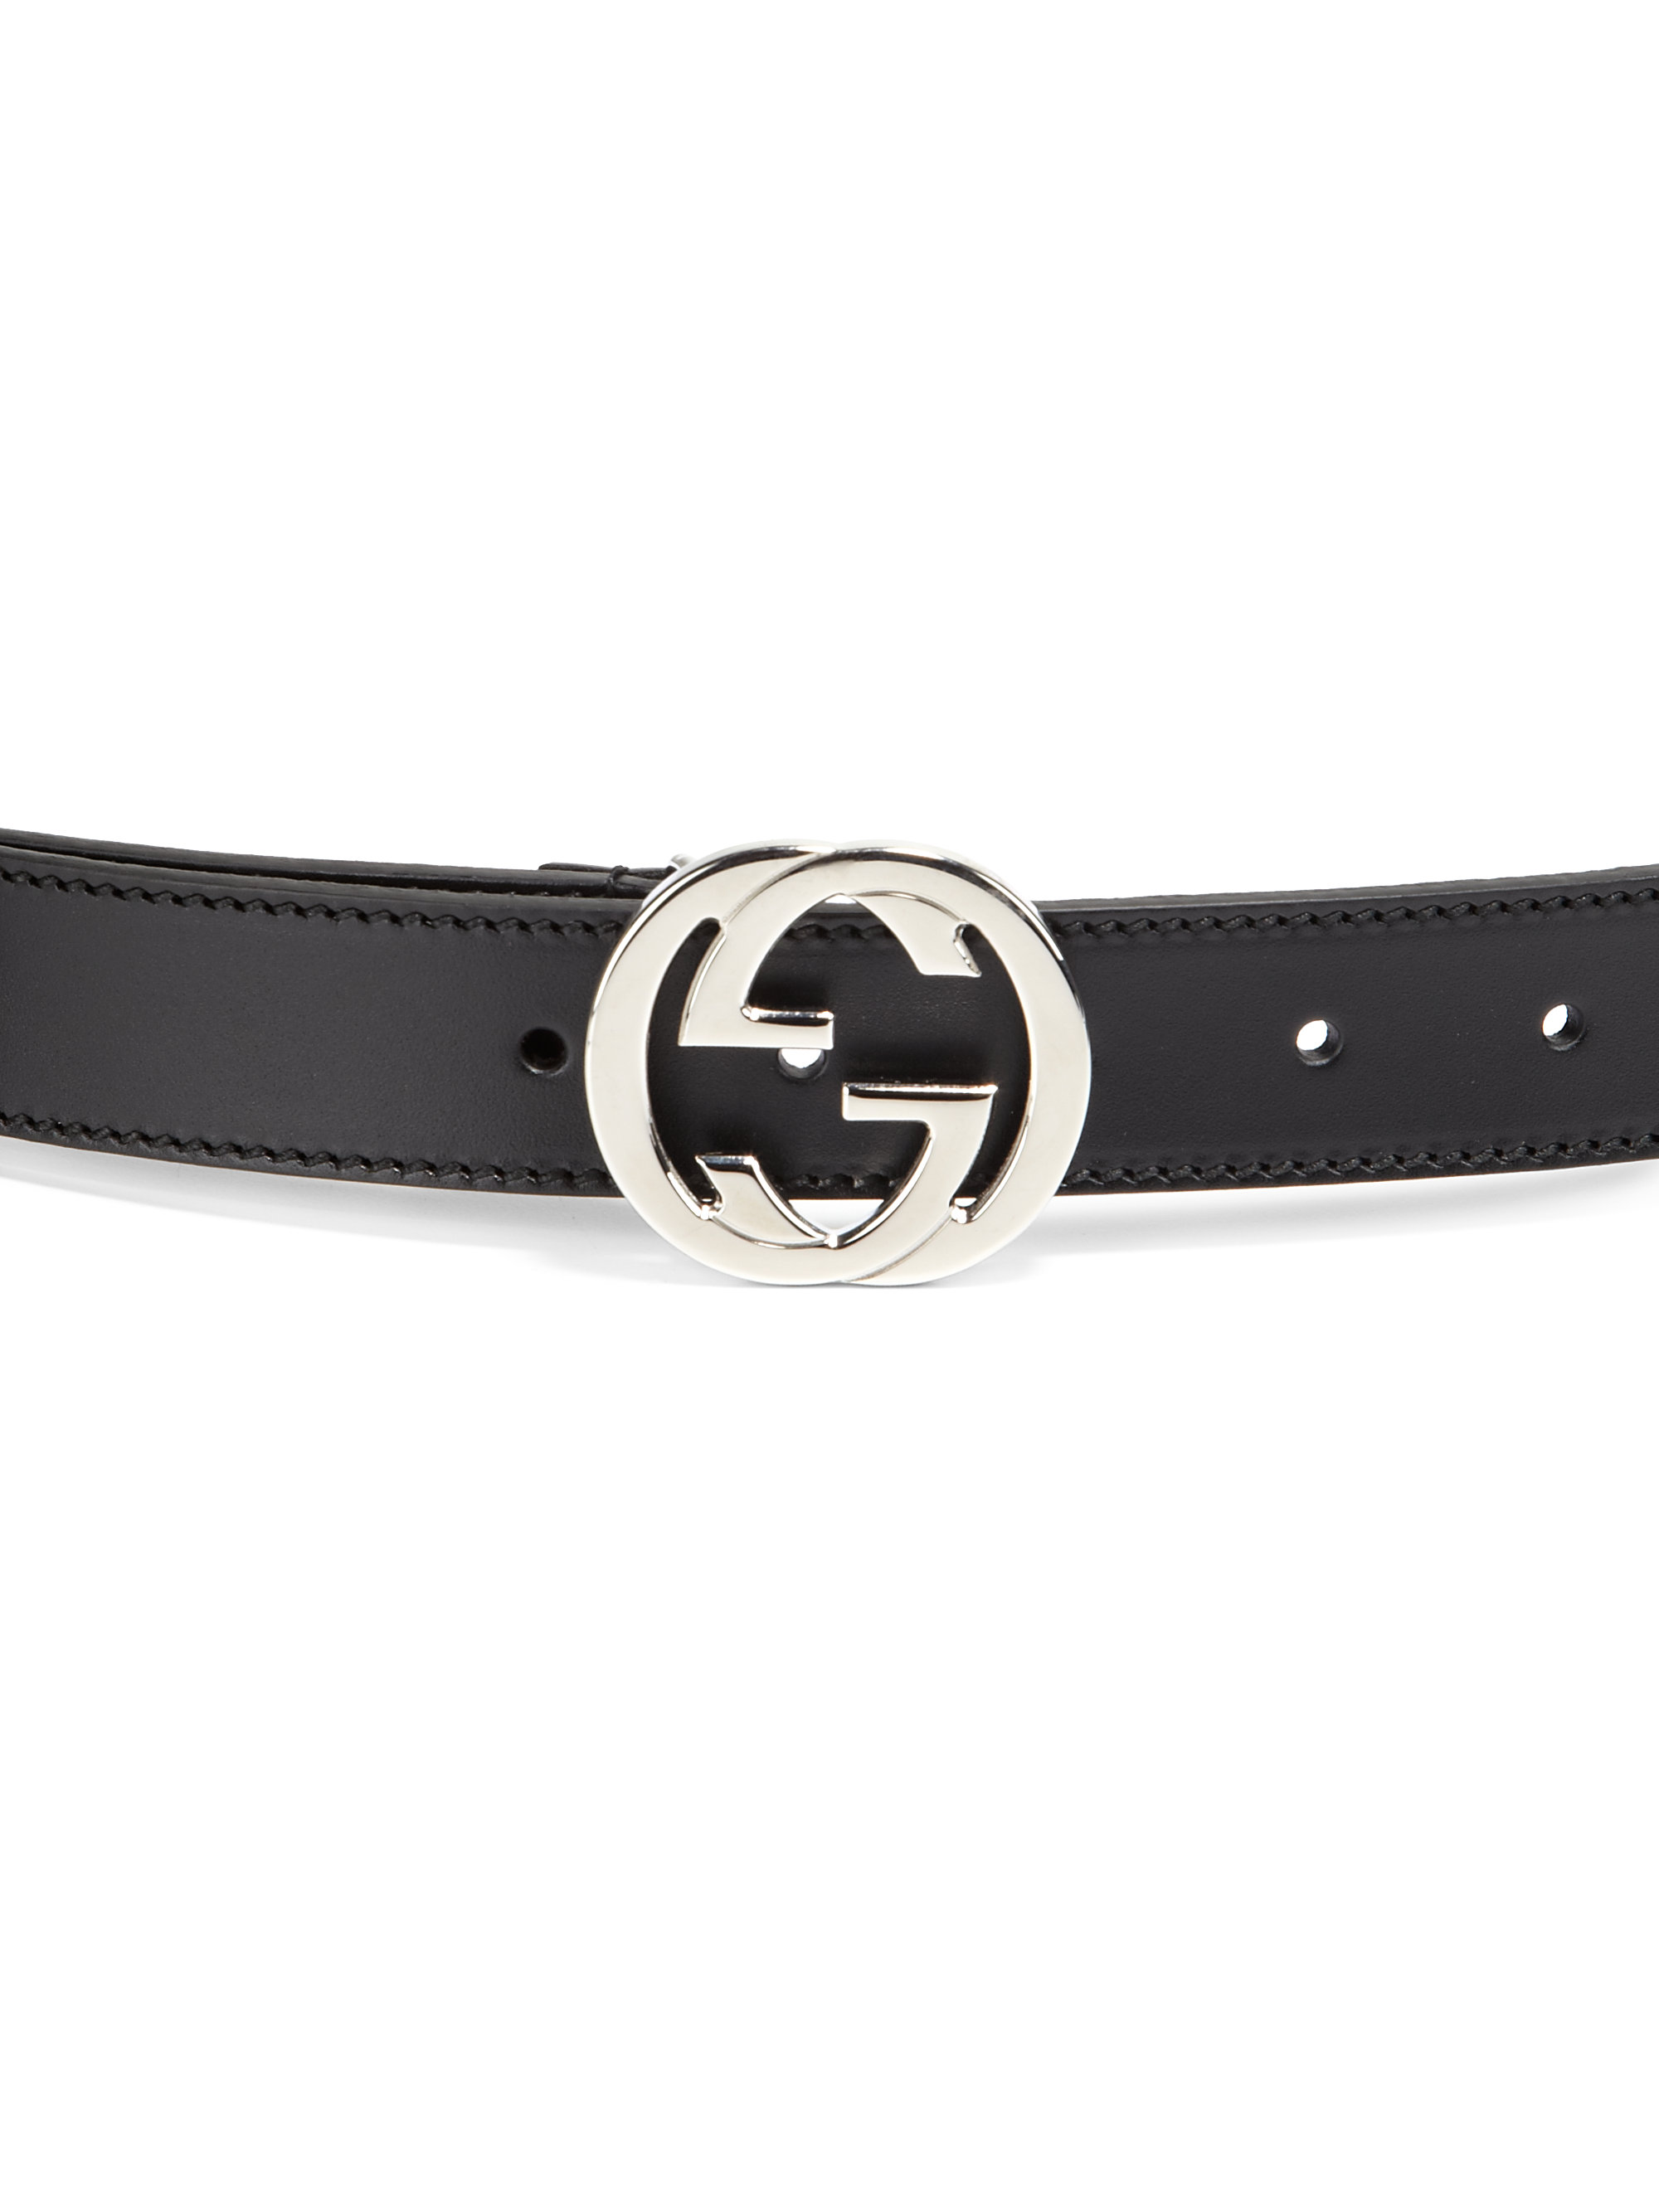 Gucci Interlocking G Leather Belt in Black - Lyst